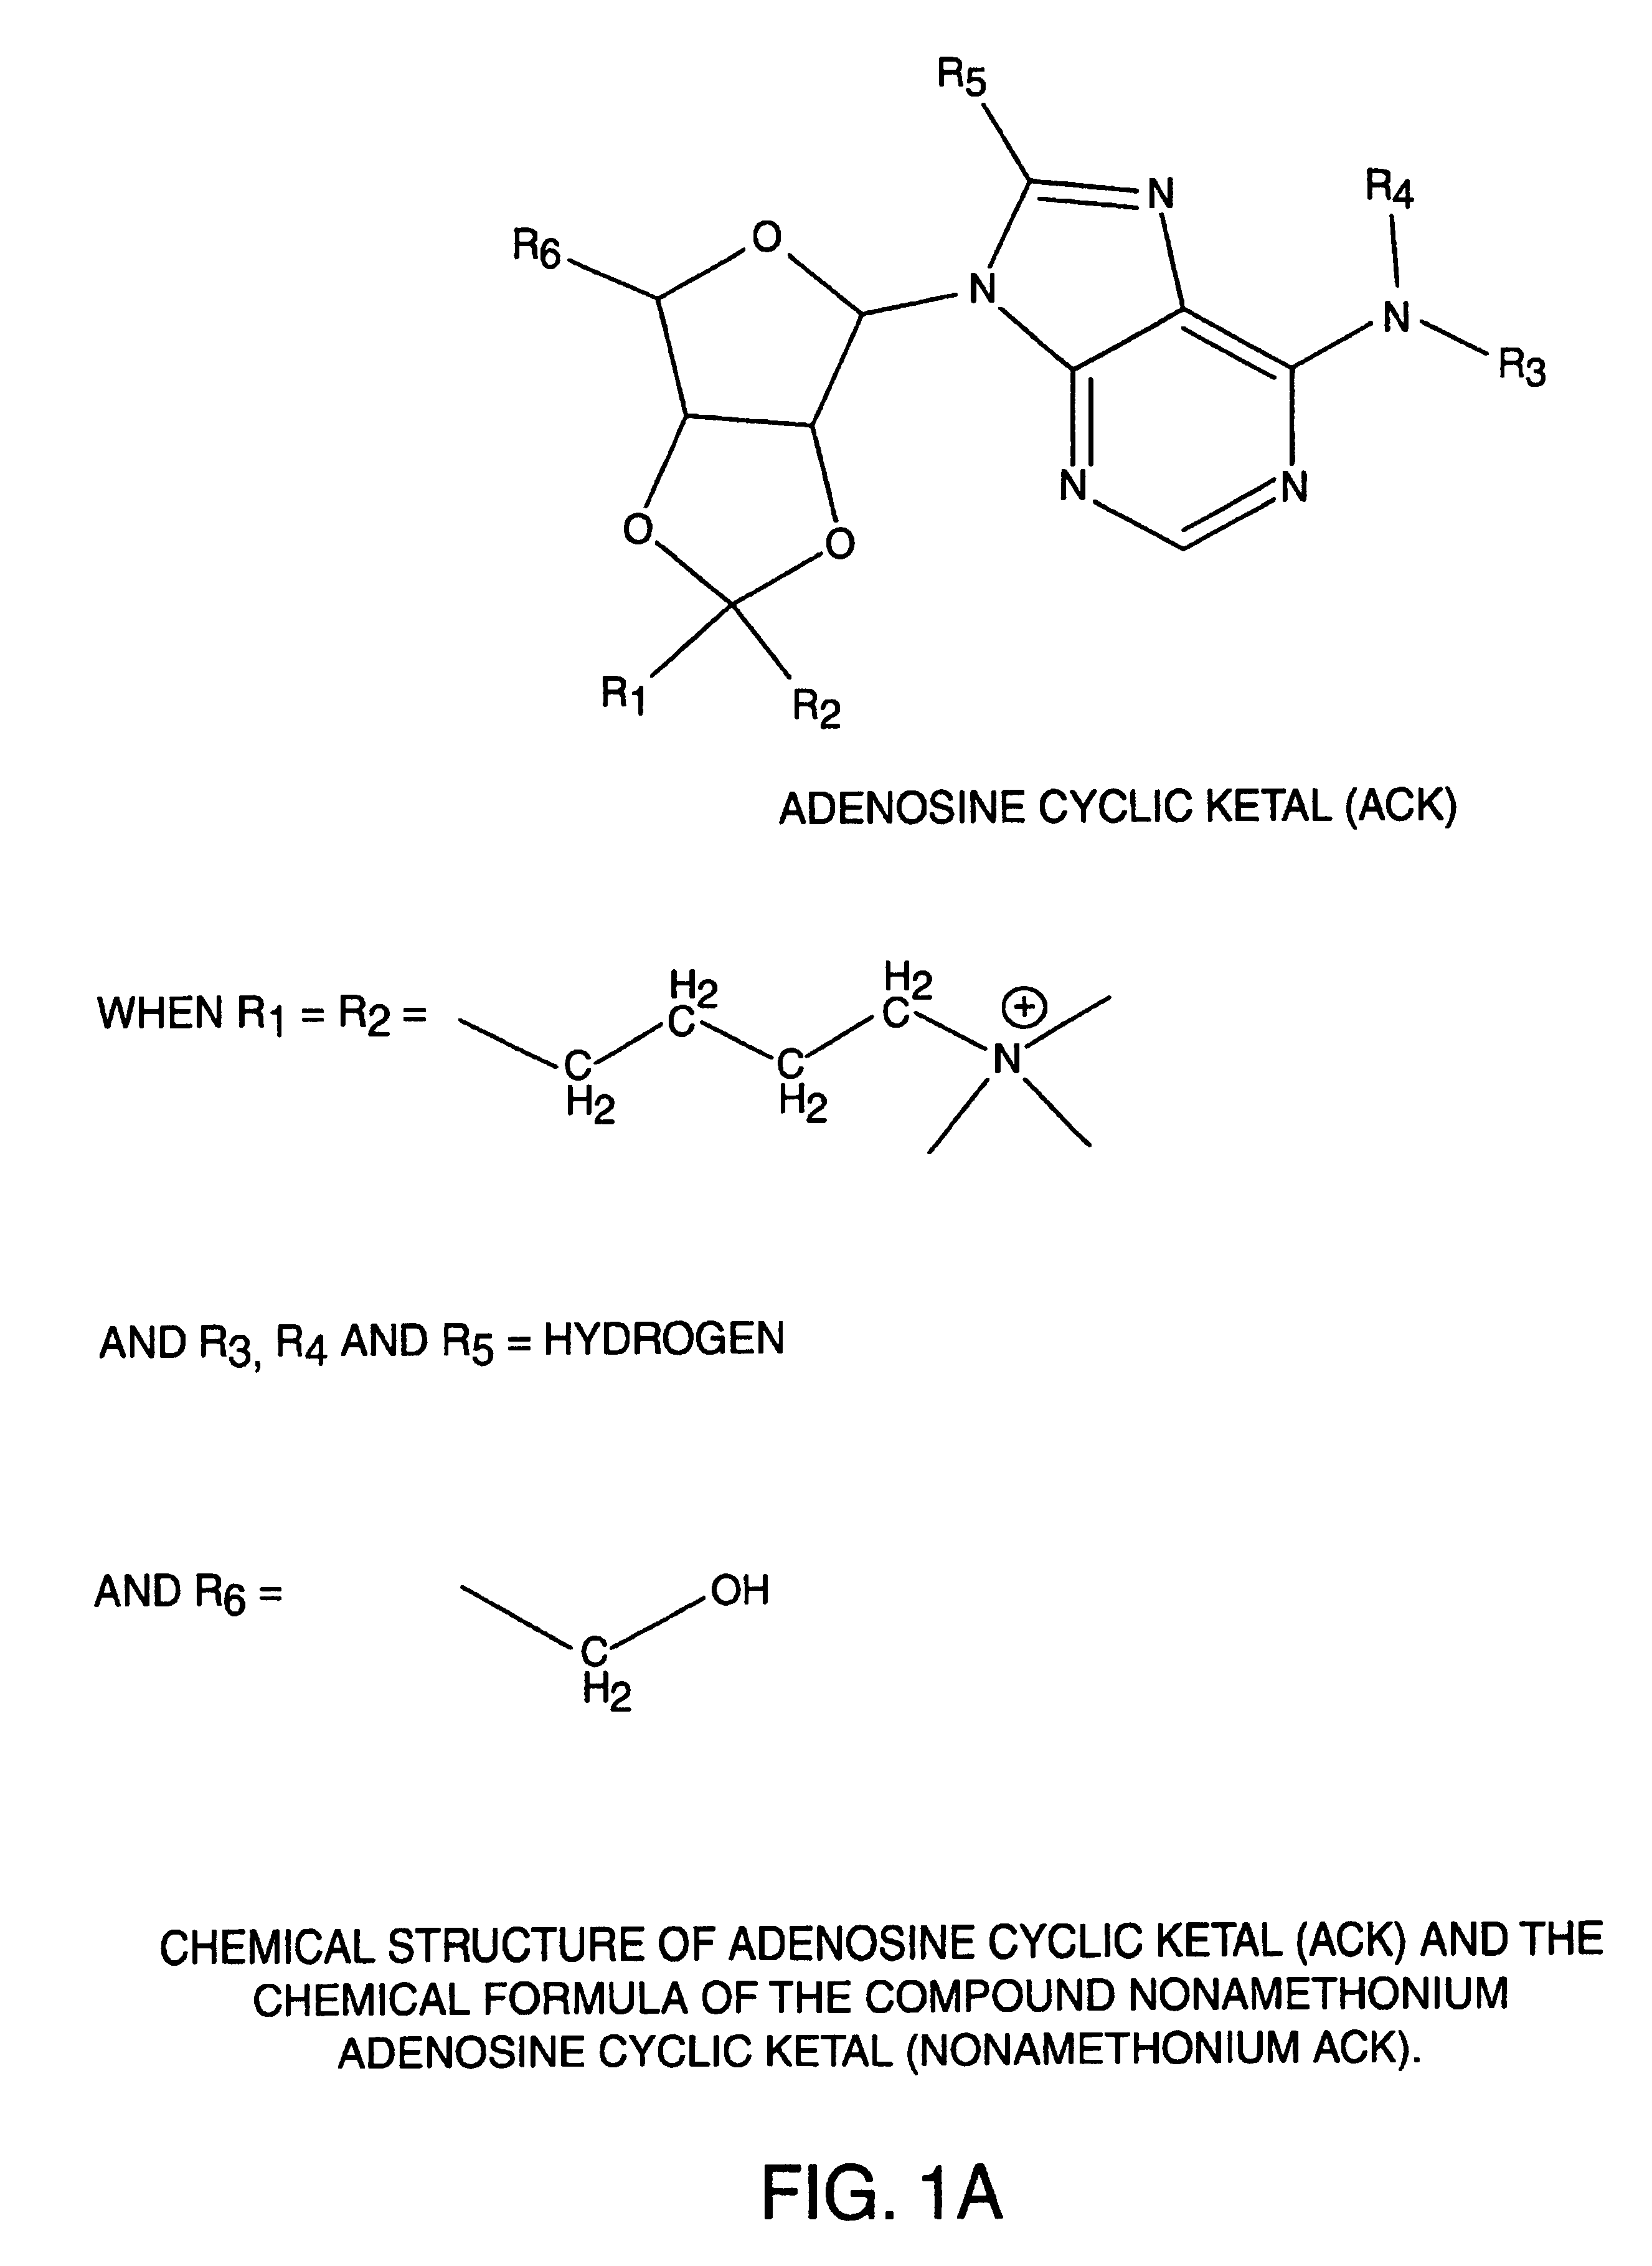 Adenosine cyclic ketals: novel adenosine analogues for pharmacotherapy